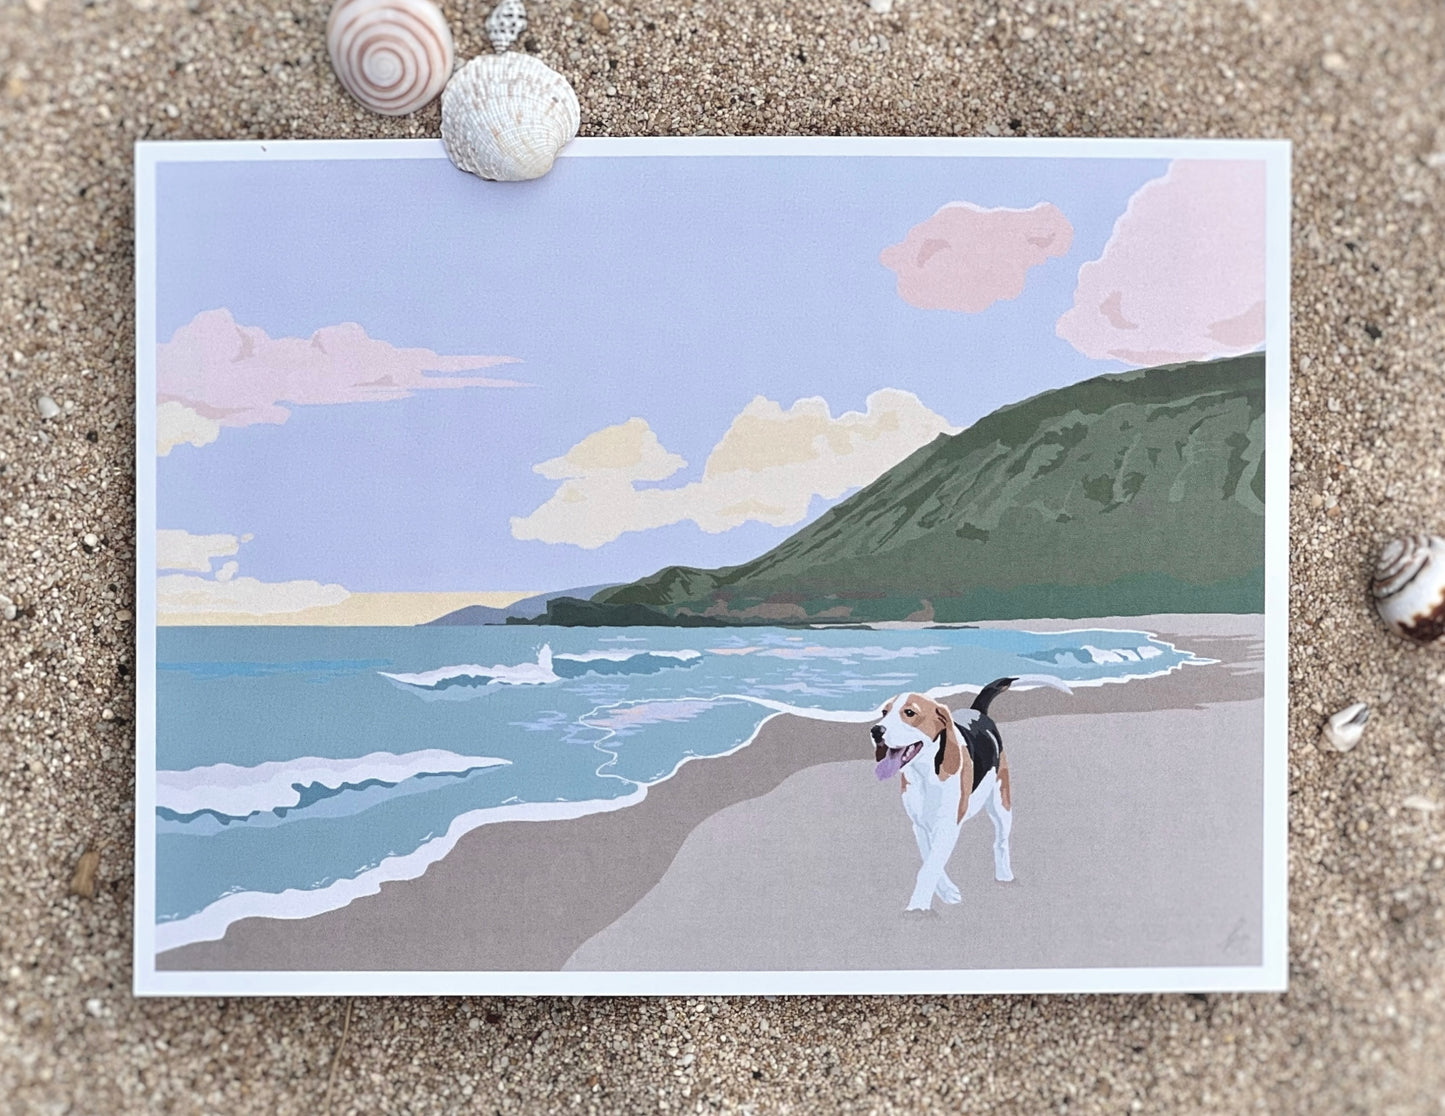 5"x7" Color print of Beagle at sandy beach, oahu